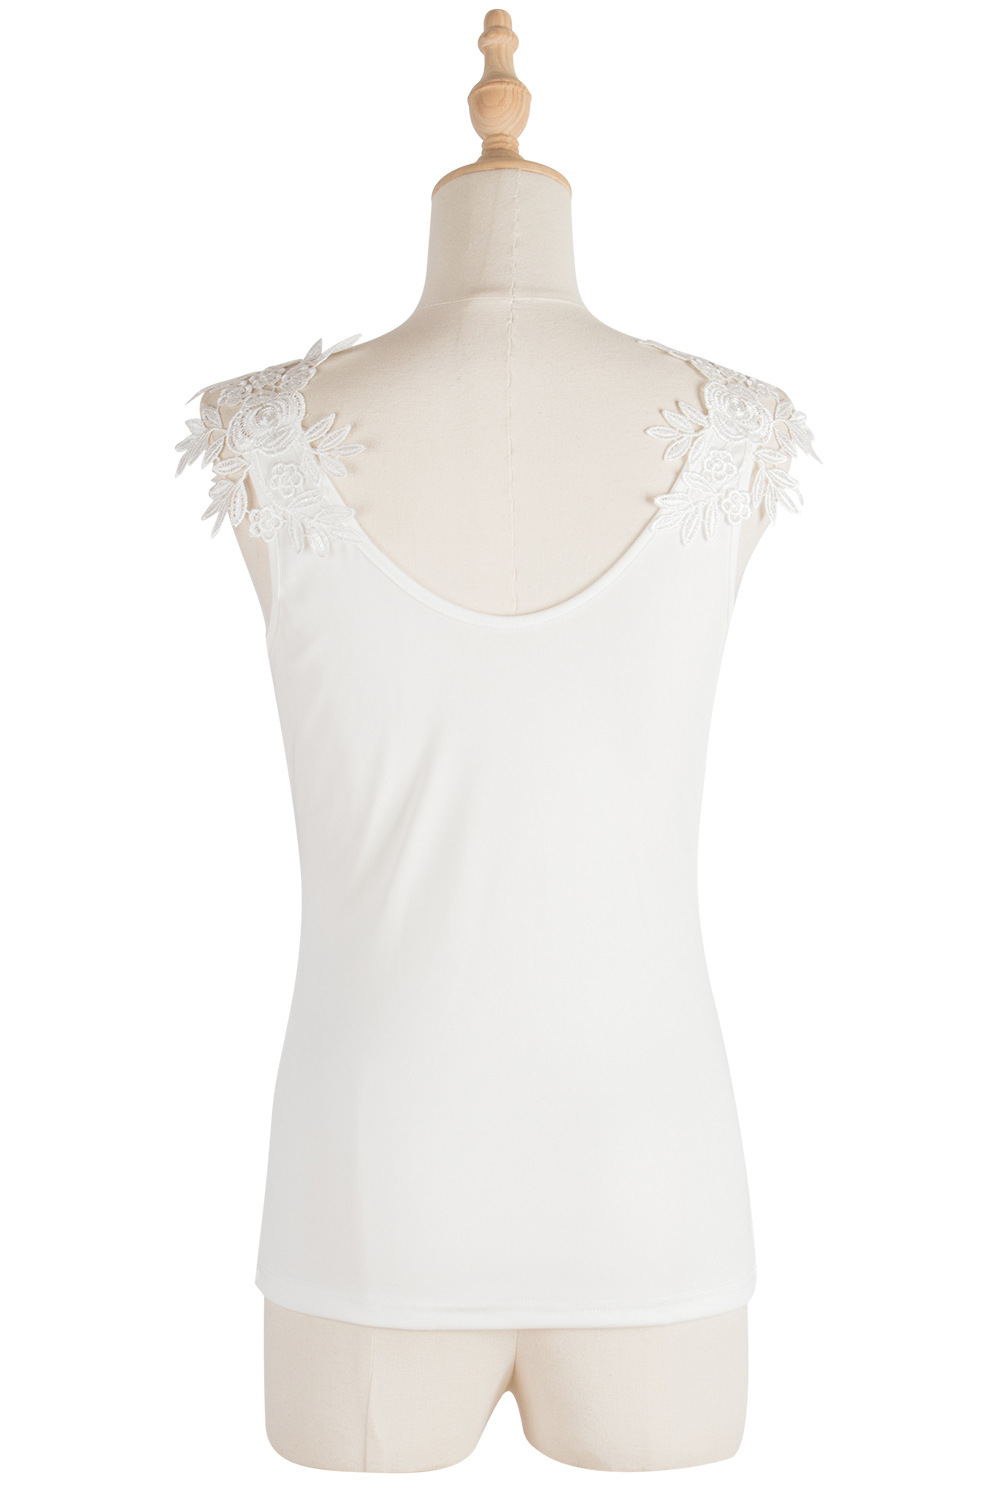 Spring white T-shirt round neck sleeveless tops